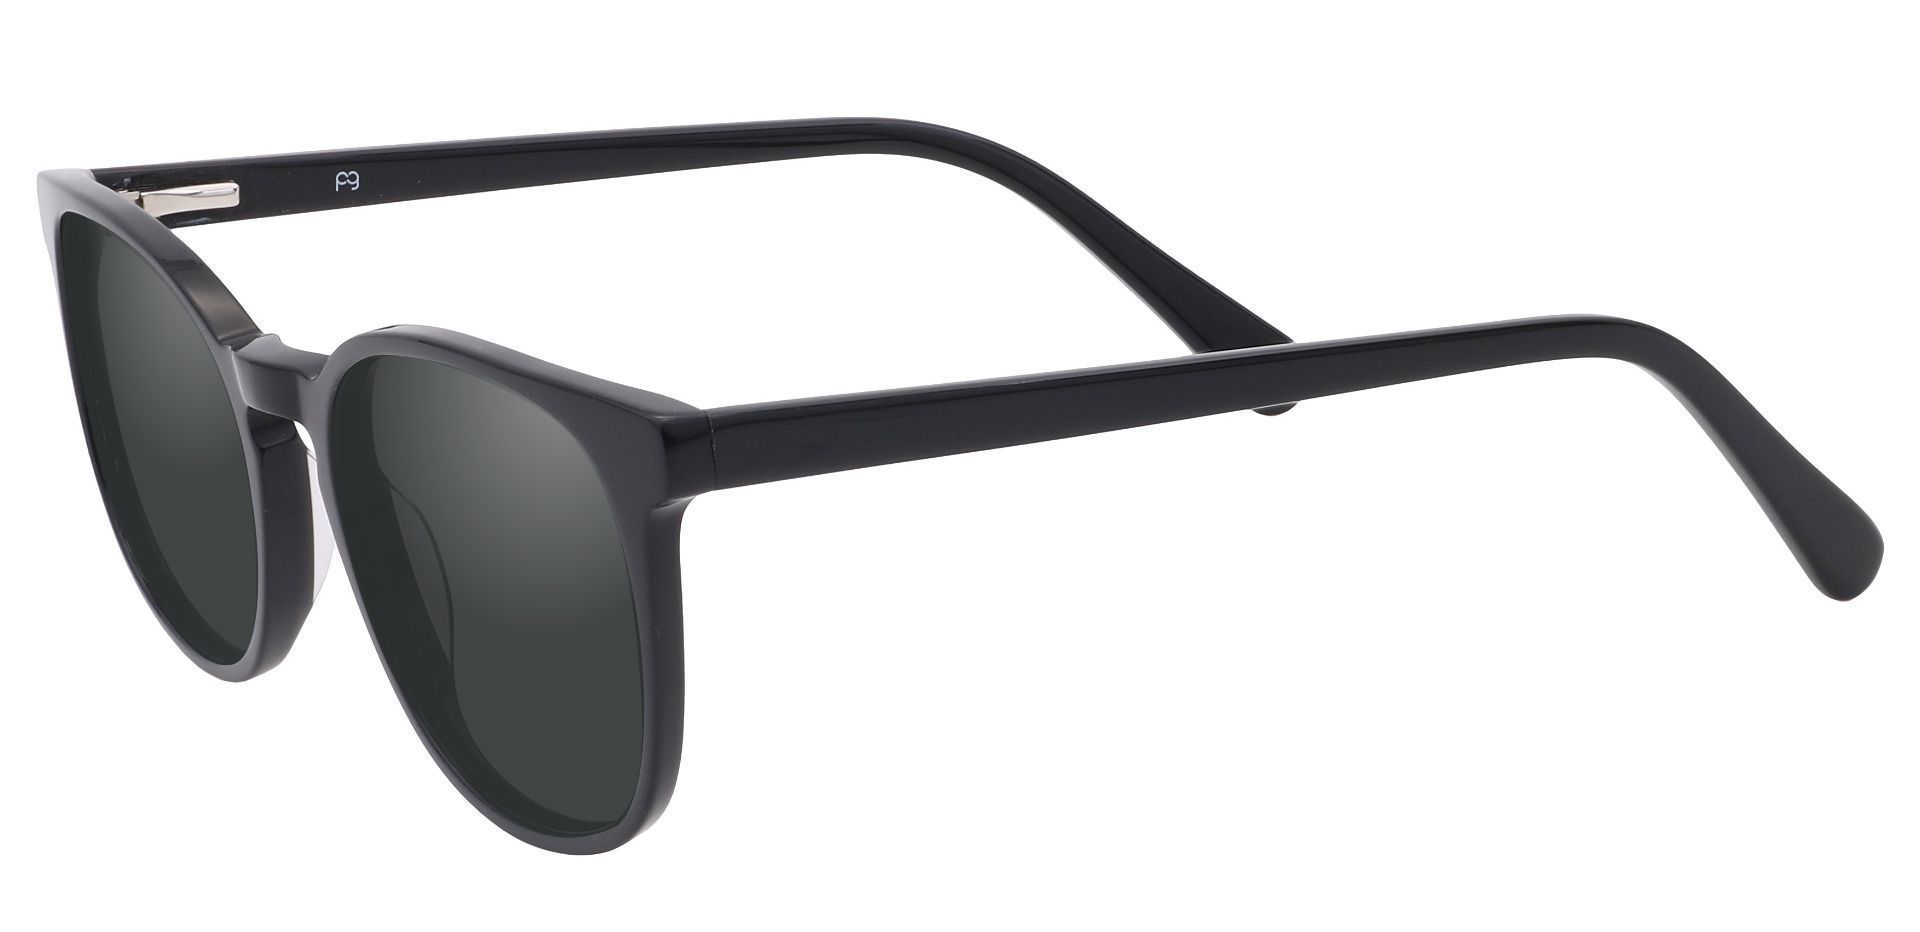 Nebula Round Prescription Sunglasses - Black Frame With Gray Lenses